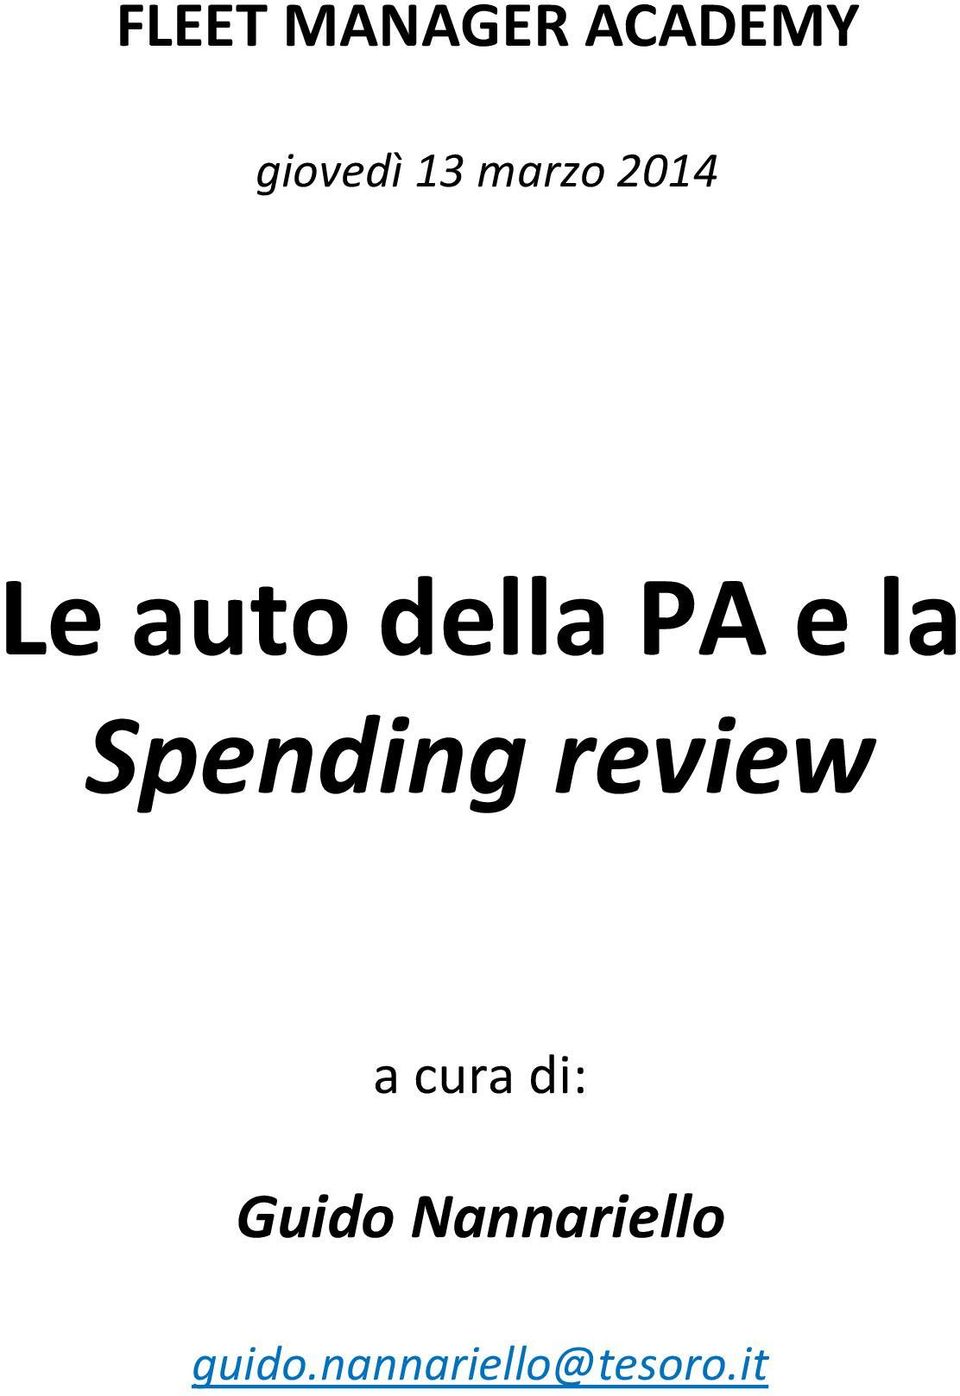 Spending review a cura di: Guido